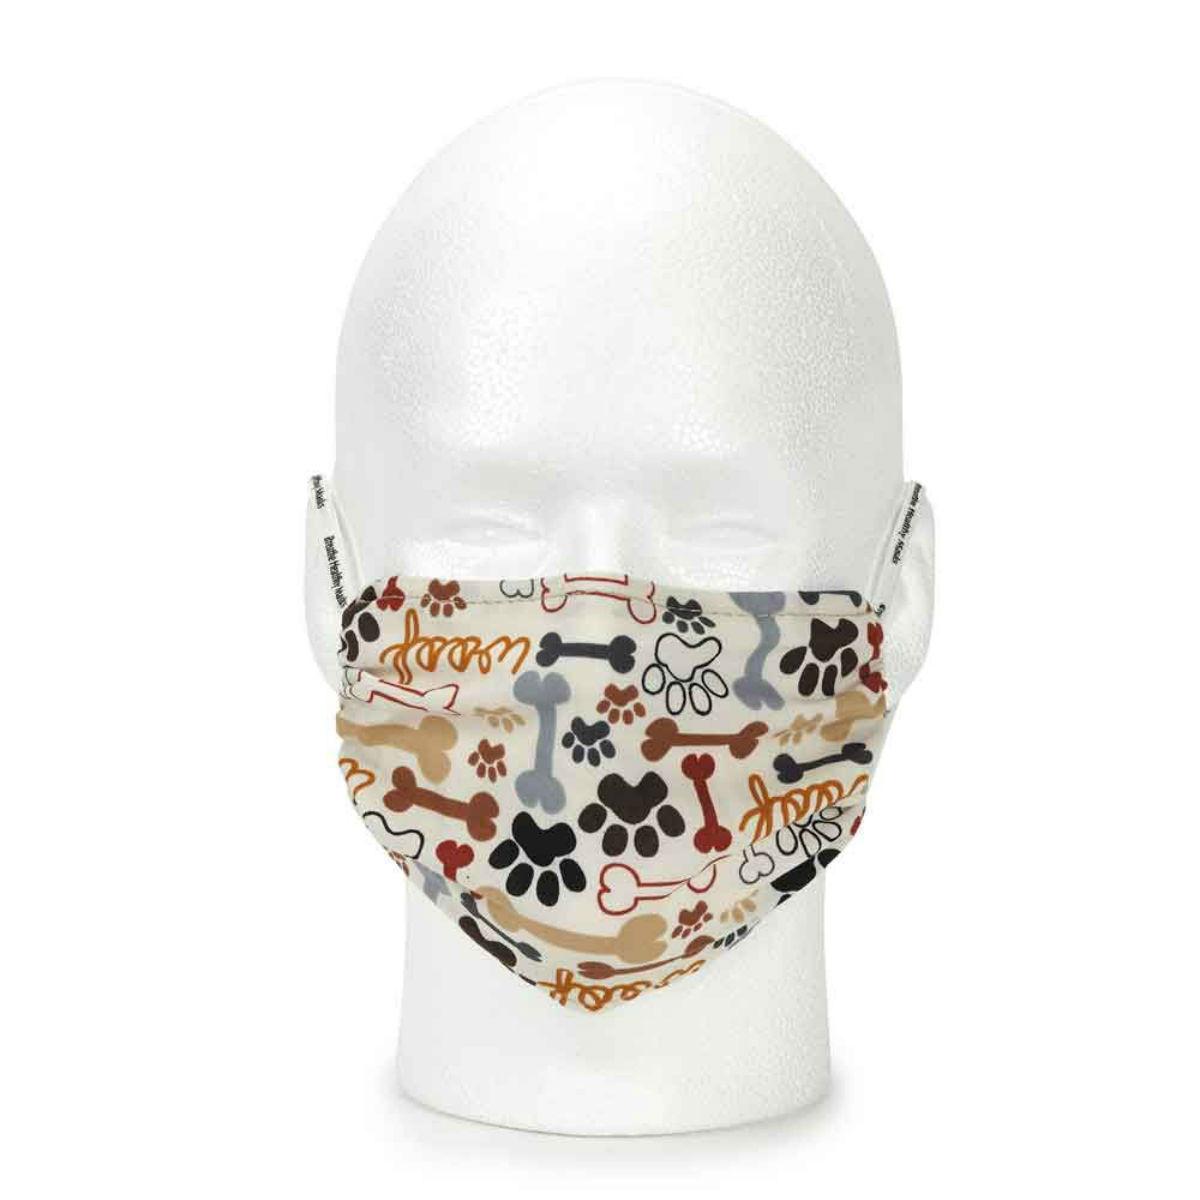 Breathe Healthy Reusable Cloth Human Face Masks - Dog Bones and Paw Prints